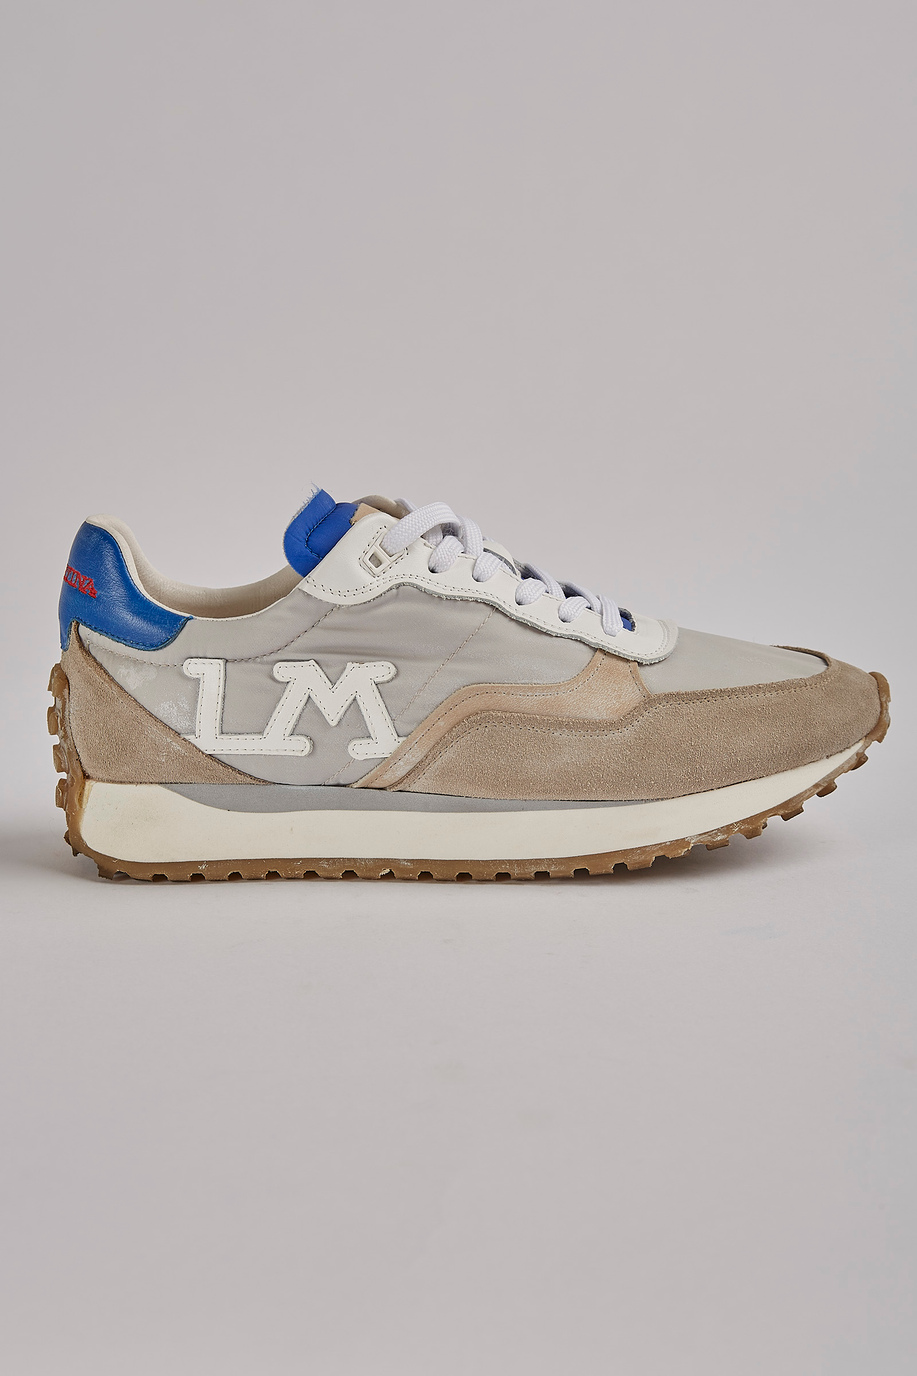 Sneaker aus Wildleder gemischt mit Stoff - no sale permanent | La Martina - Official Online Shop